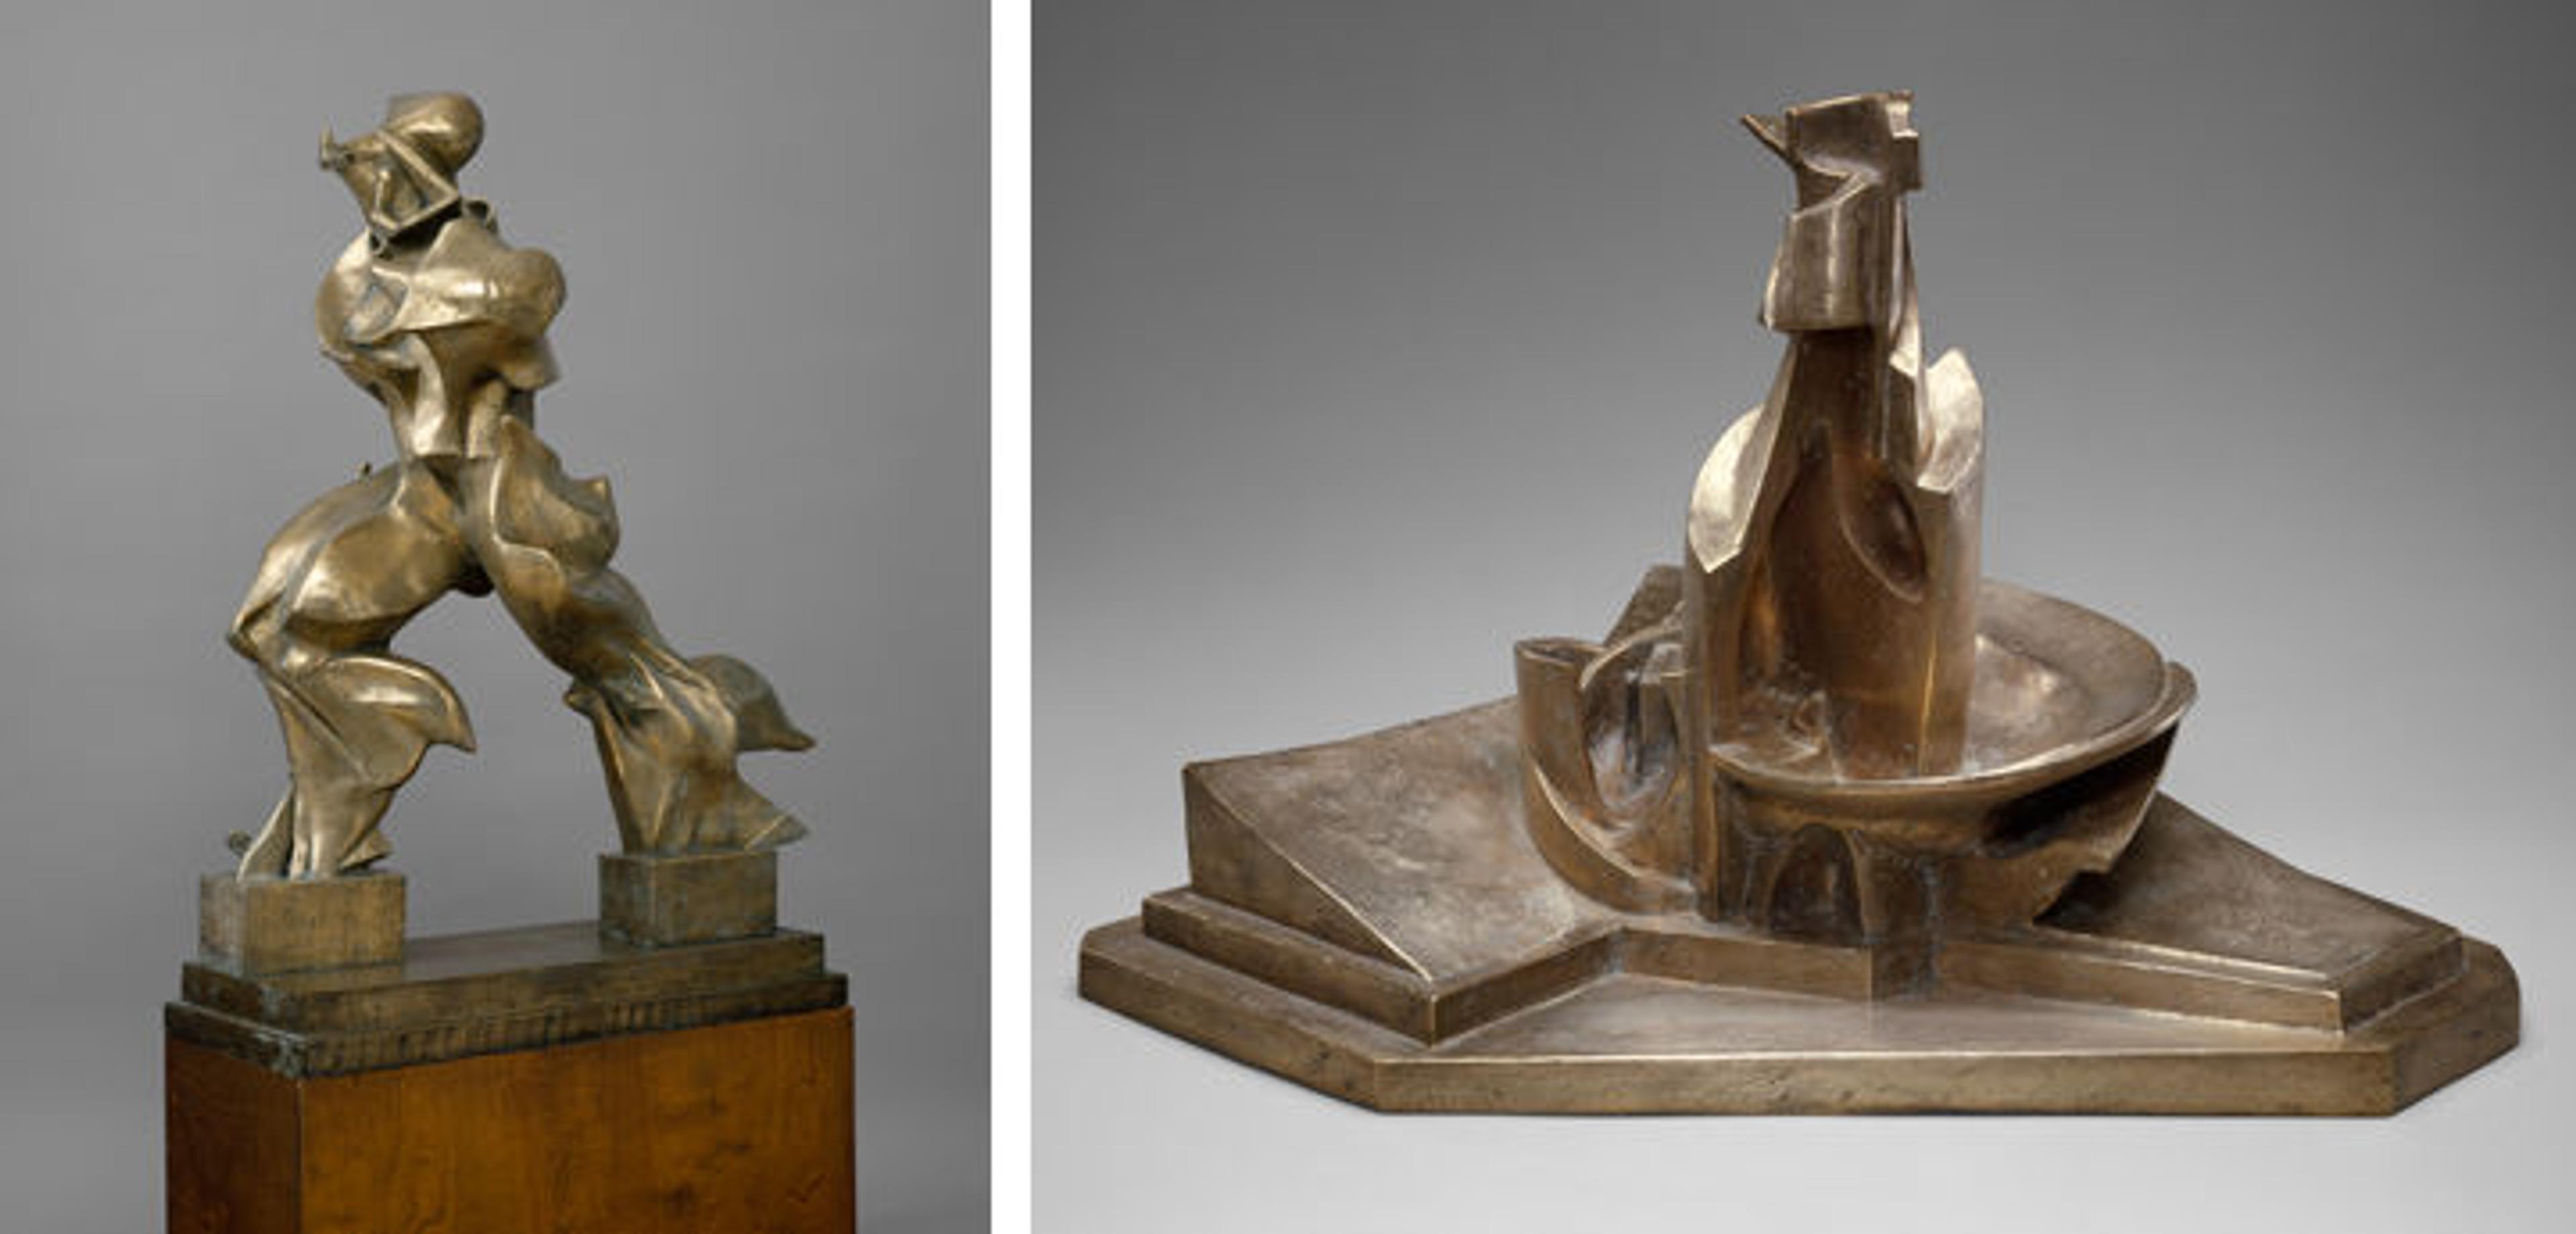 Two bronze sculptures by Umberto Boccioni